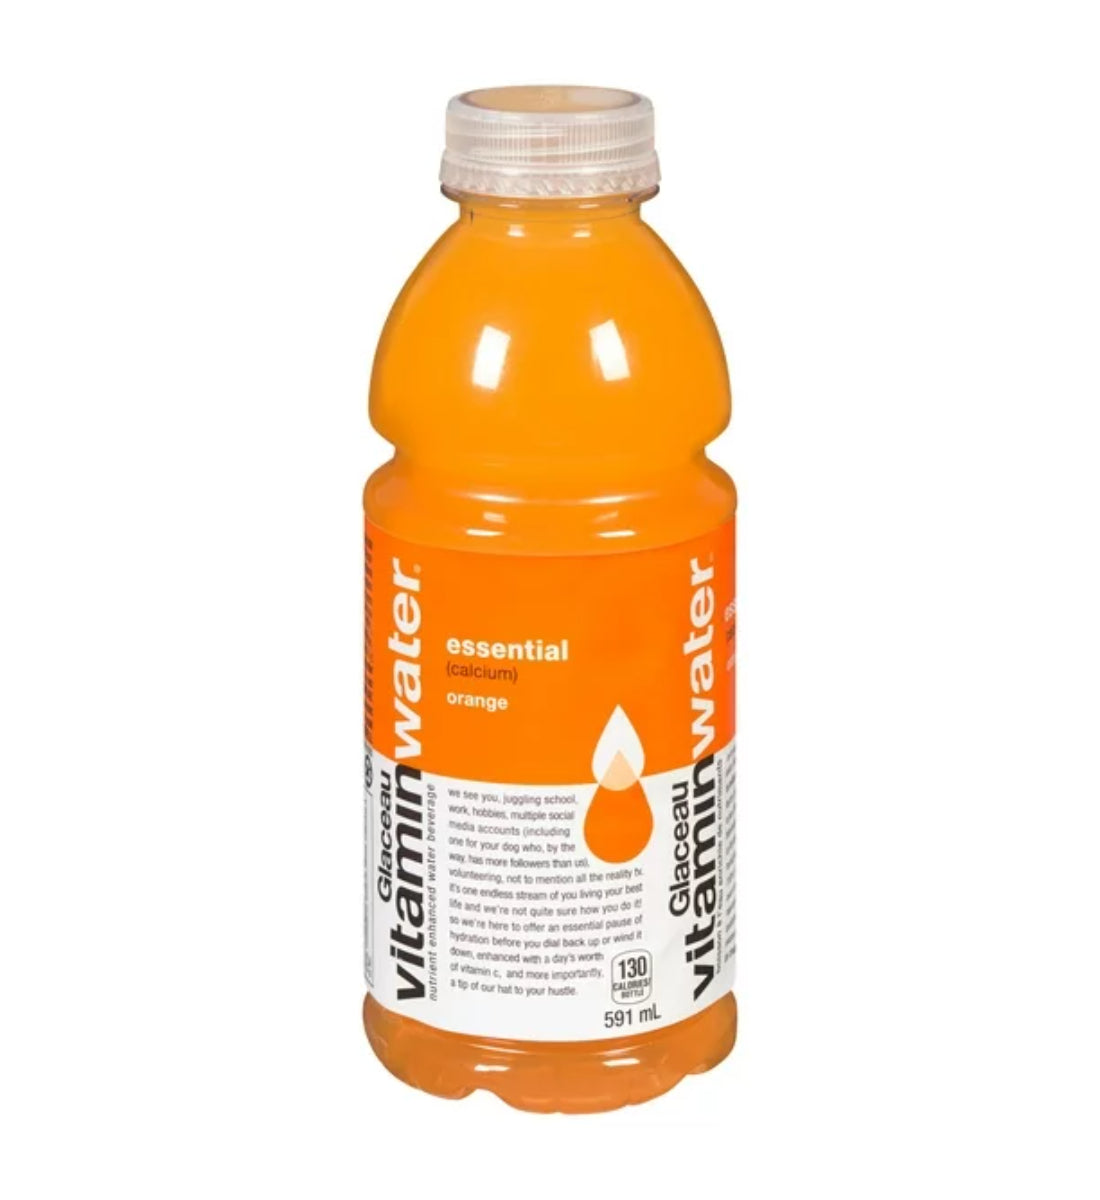 Glaceau Vitamin Water Zero Sugar Rise Orange 591ml (12 pack)